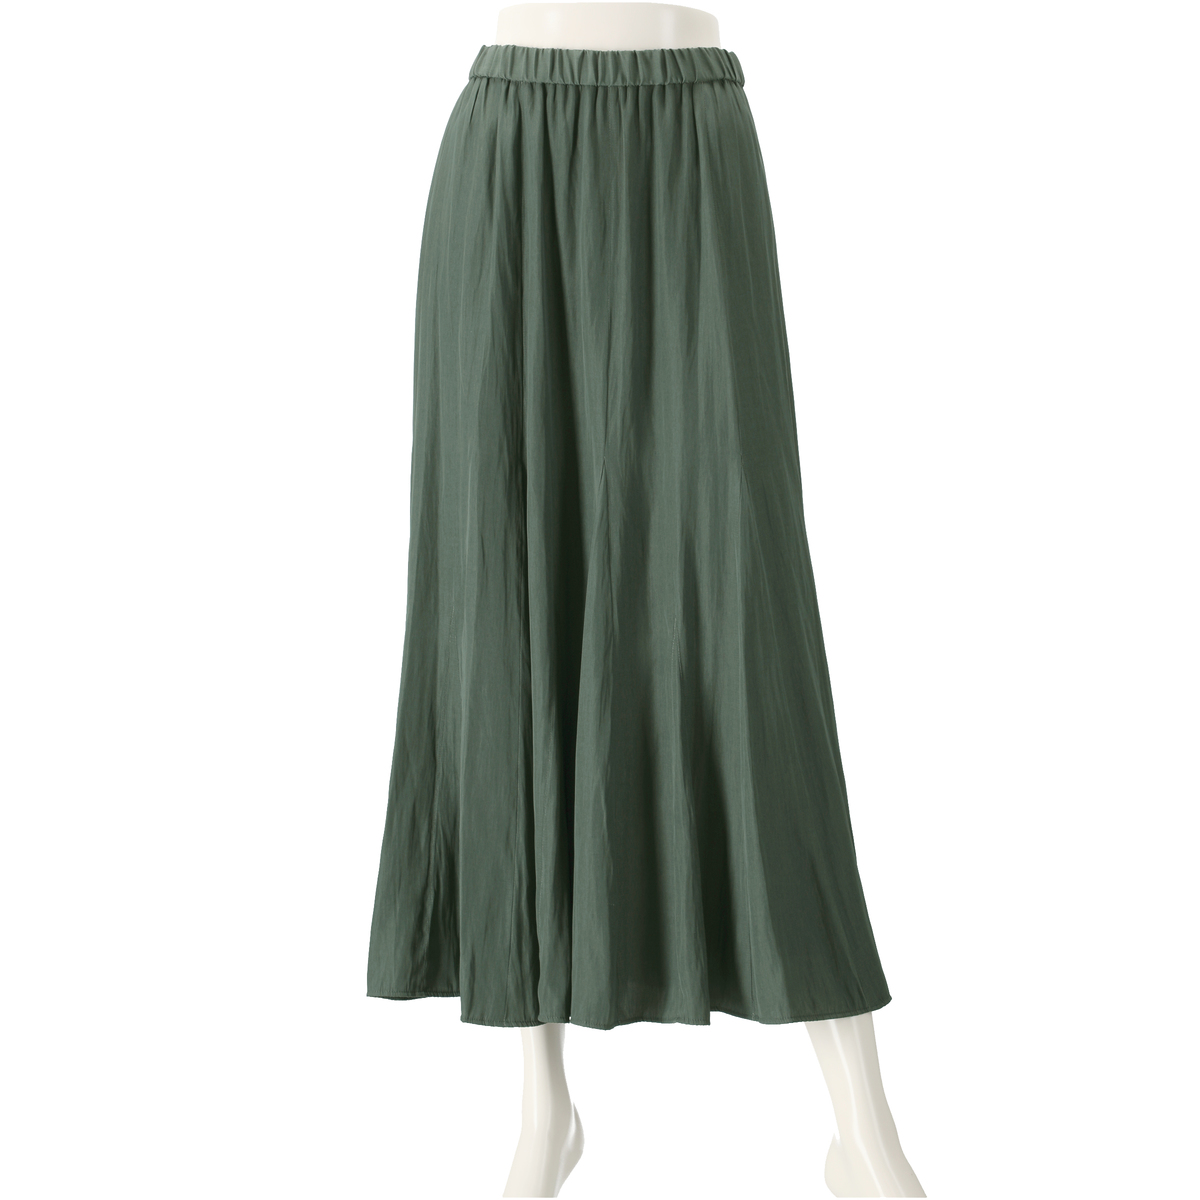  UNTITLED 割繊ロングフレアスカート[日本製]  4  グリーン